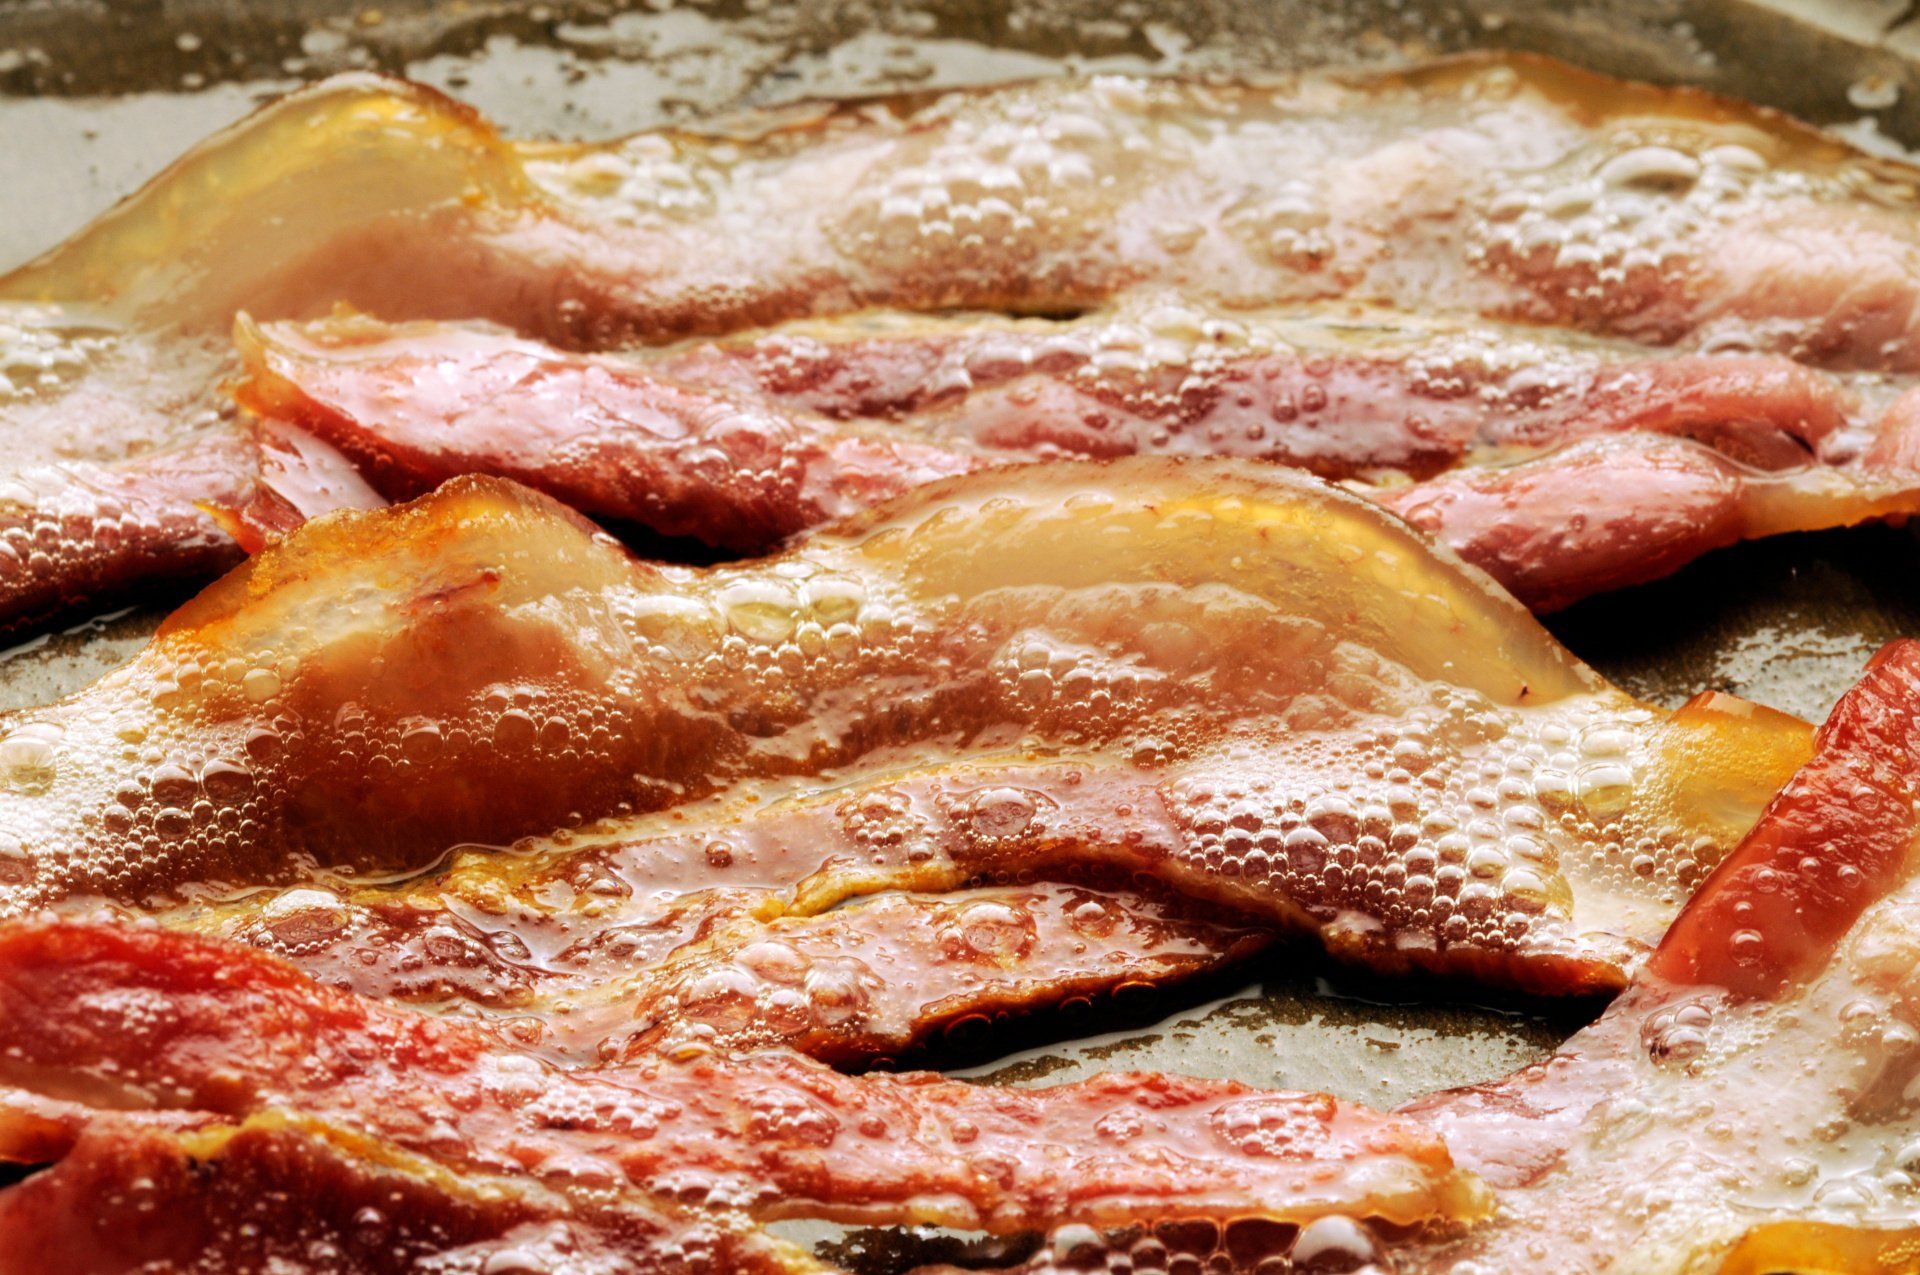 bacon and bacon grease